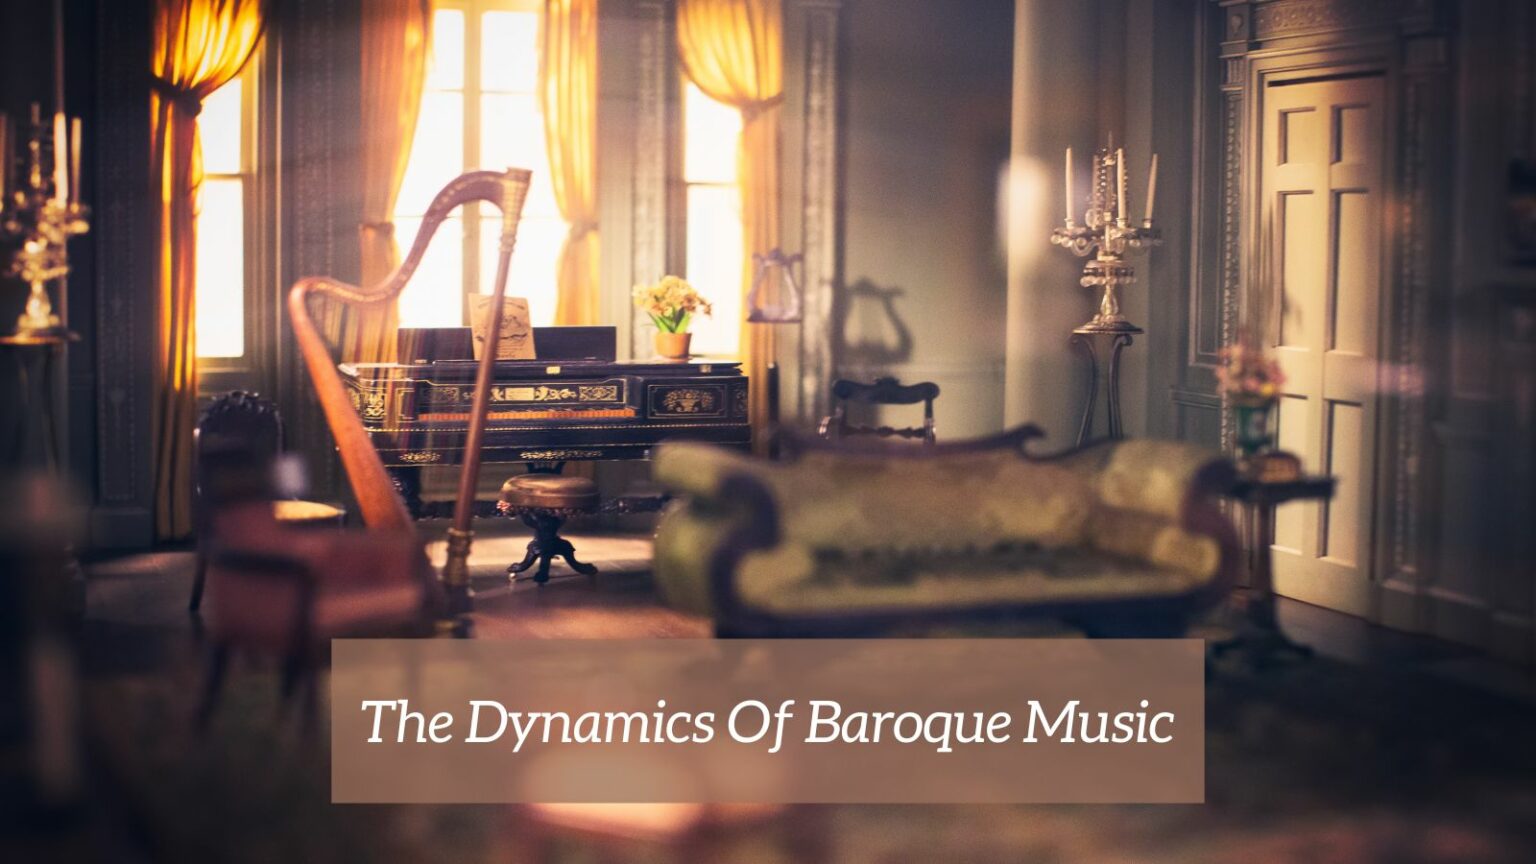 Dynamics Of Baroque Music 1536x864 